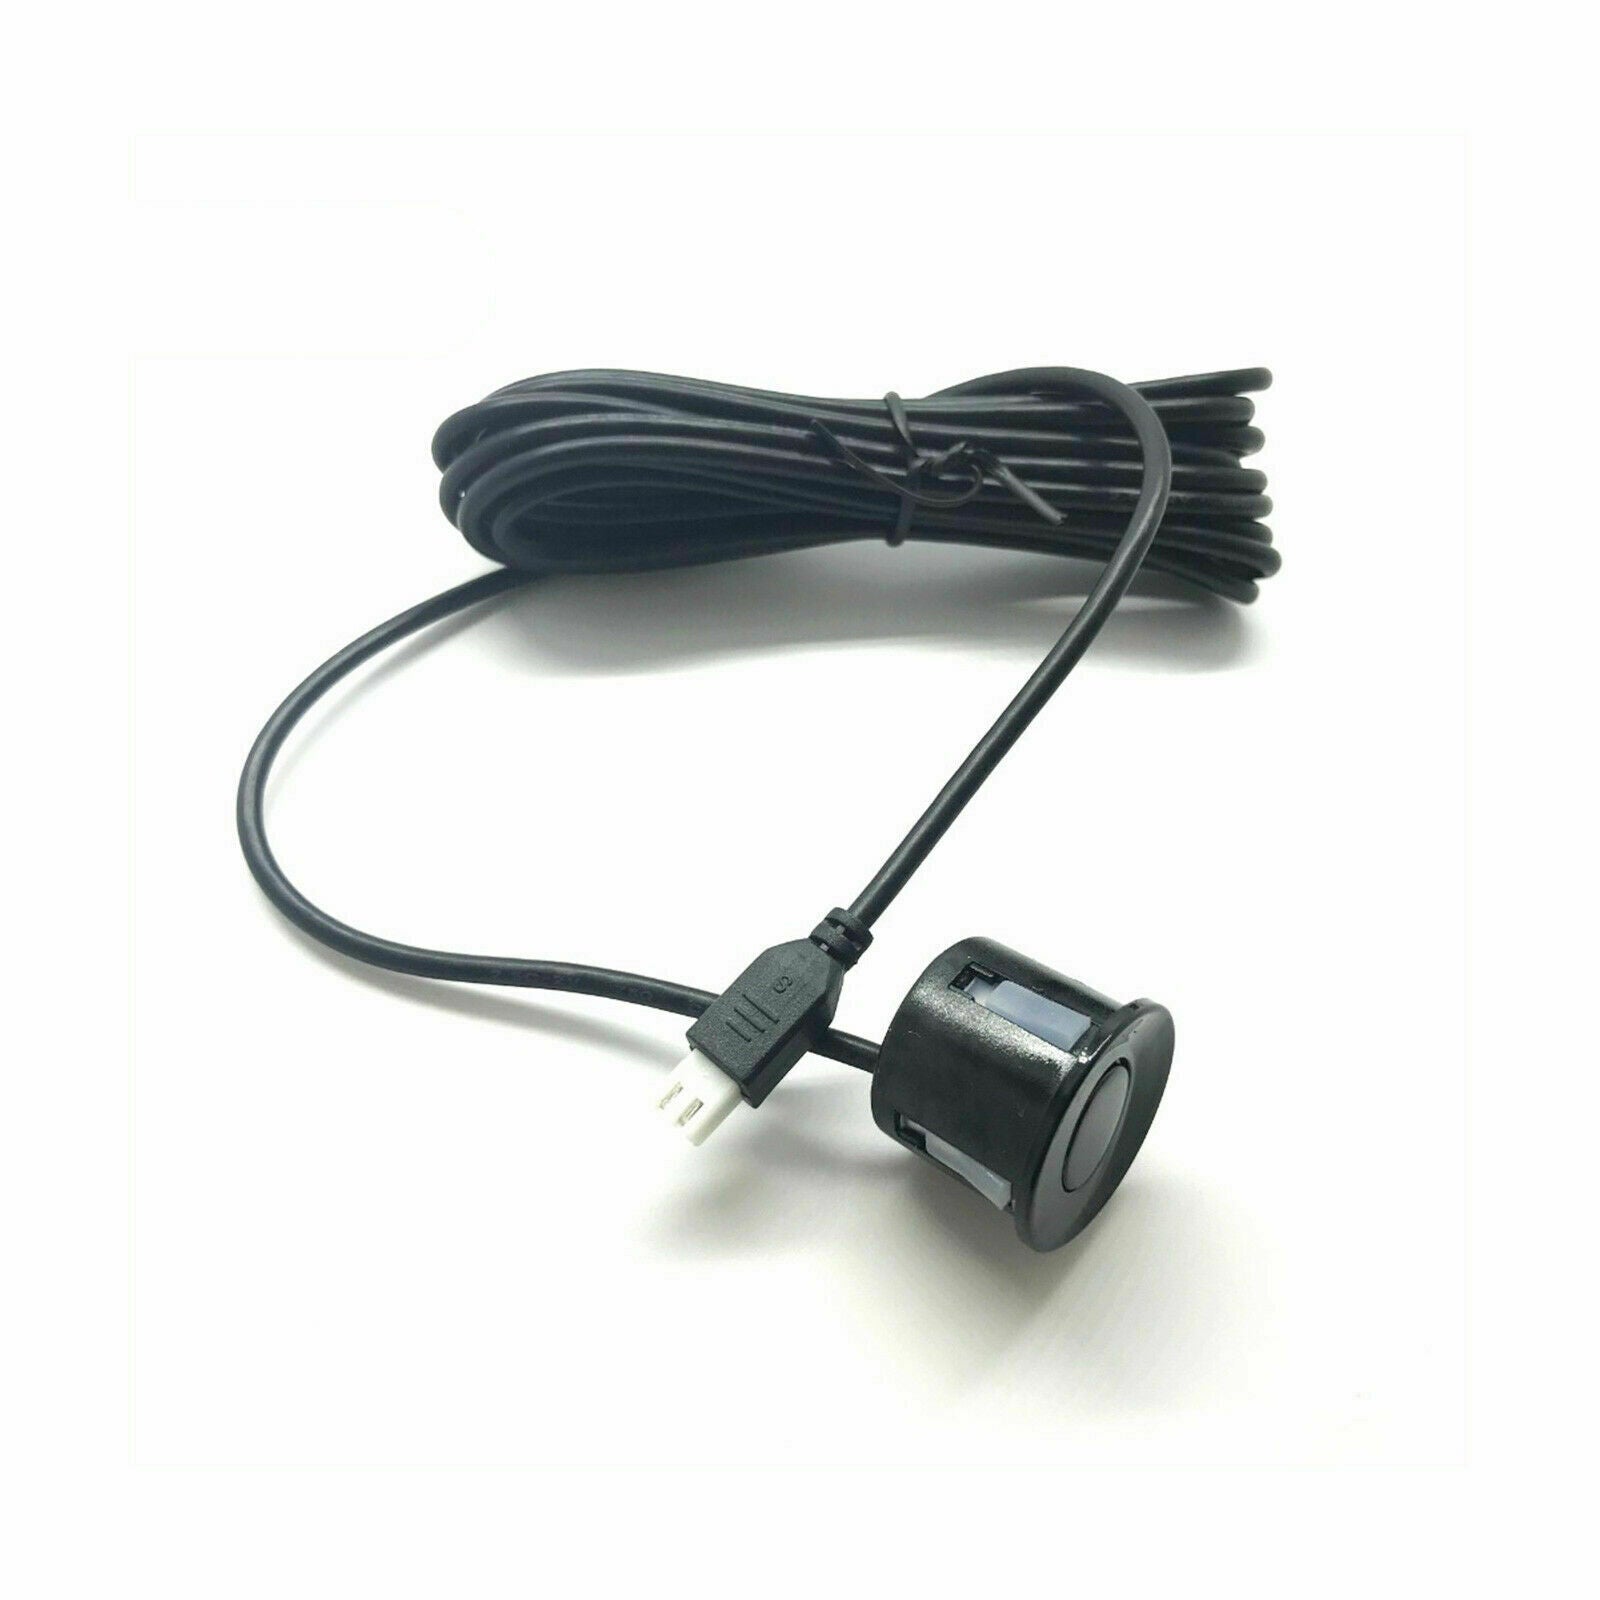 Sensori di Parcheggio - Display LED, Avviso Acustico, Retromarcia, Kit Capsule.